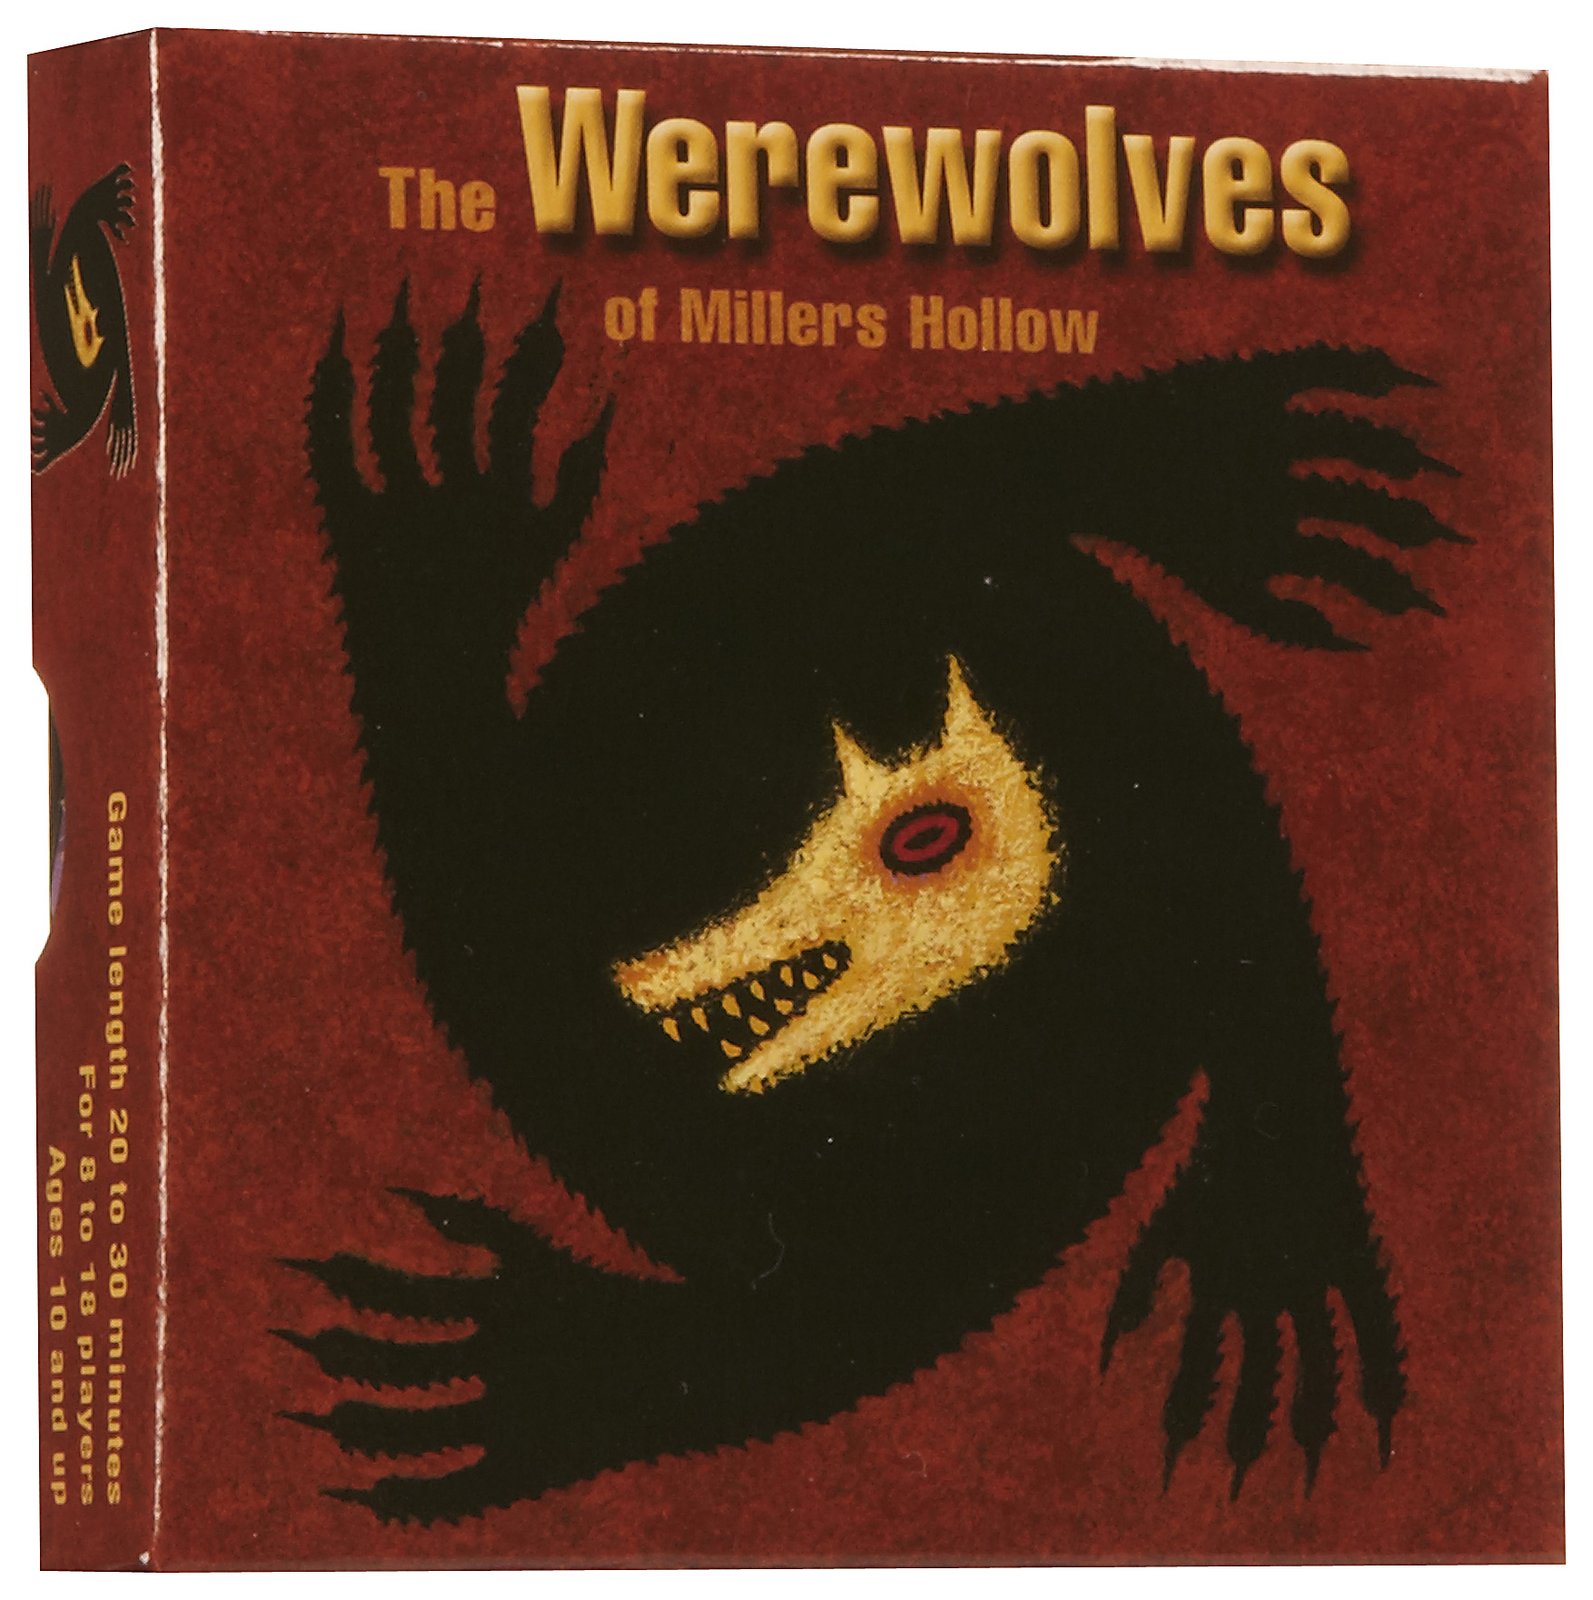 The Werewolves of Miller’s Hollow